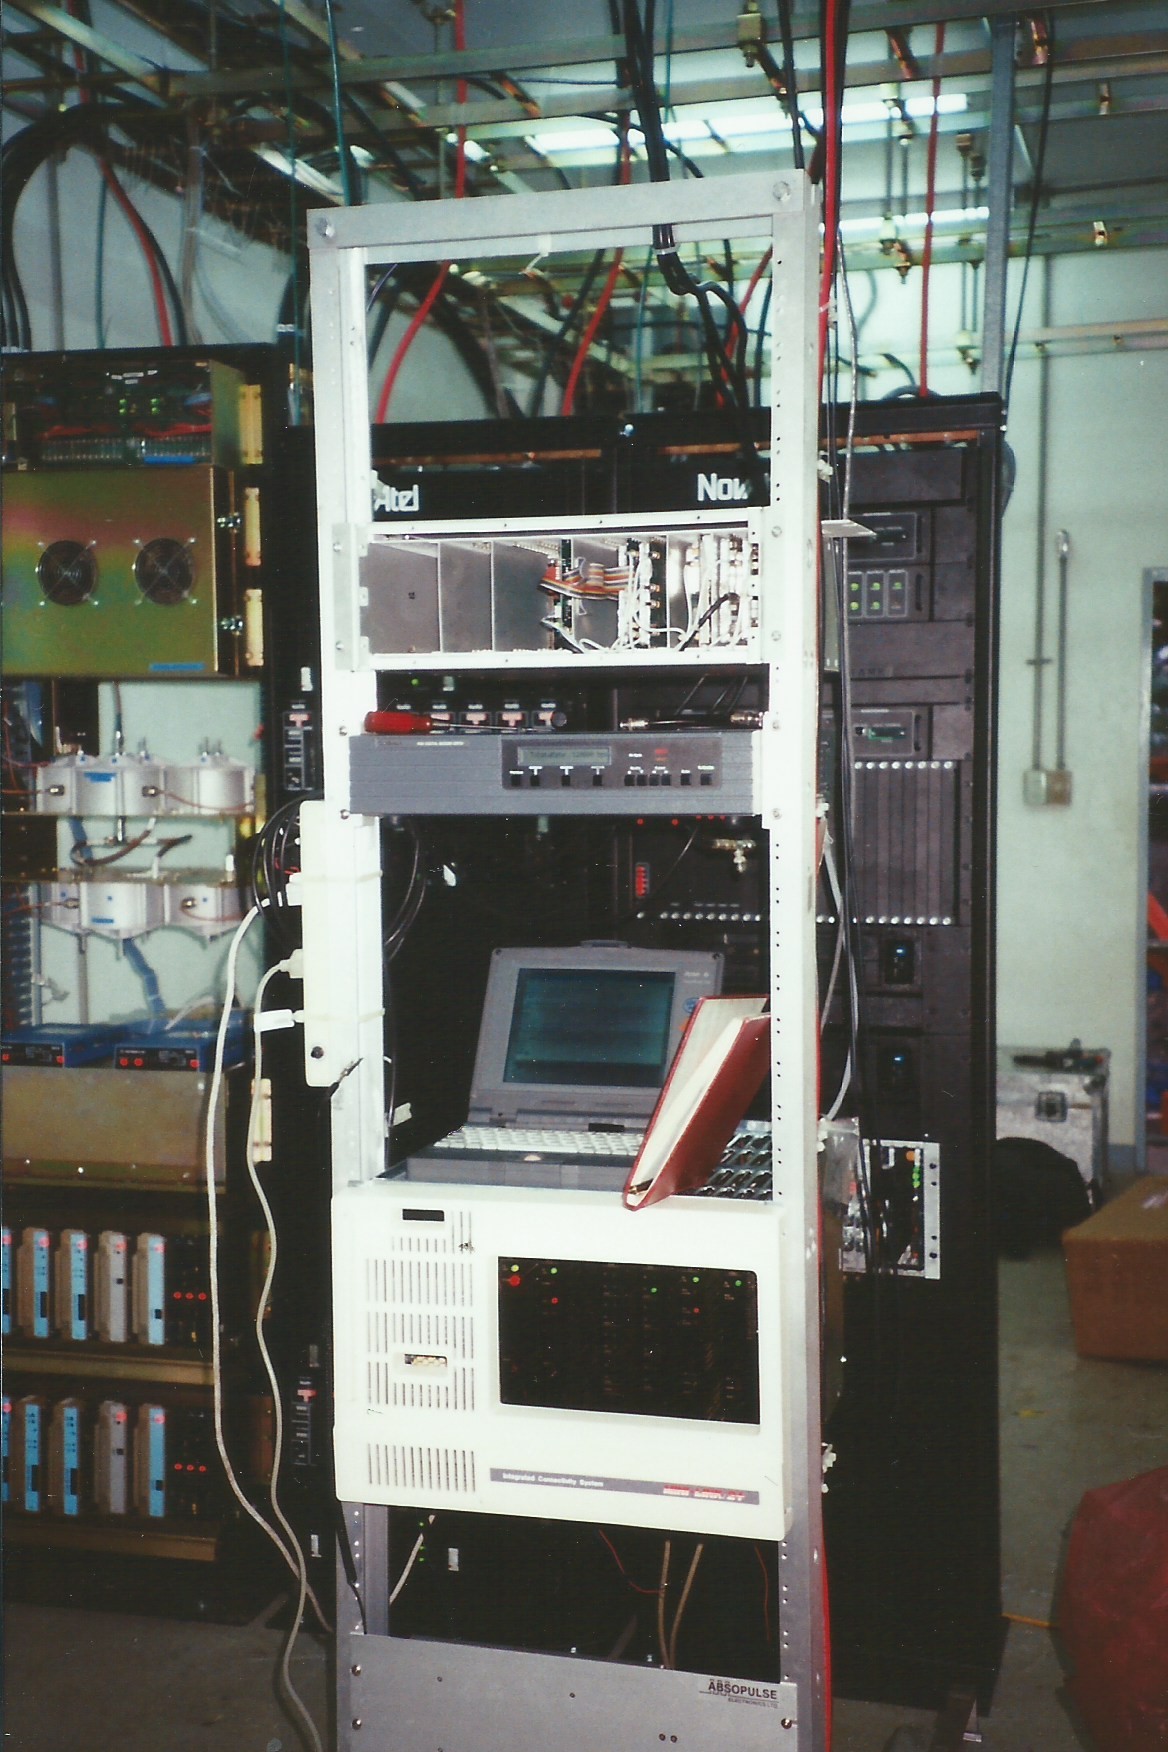 a computer on a rack